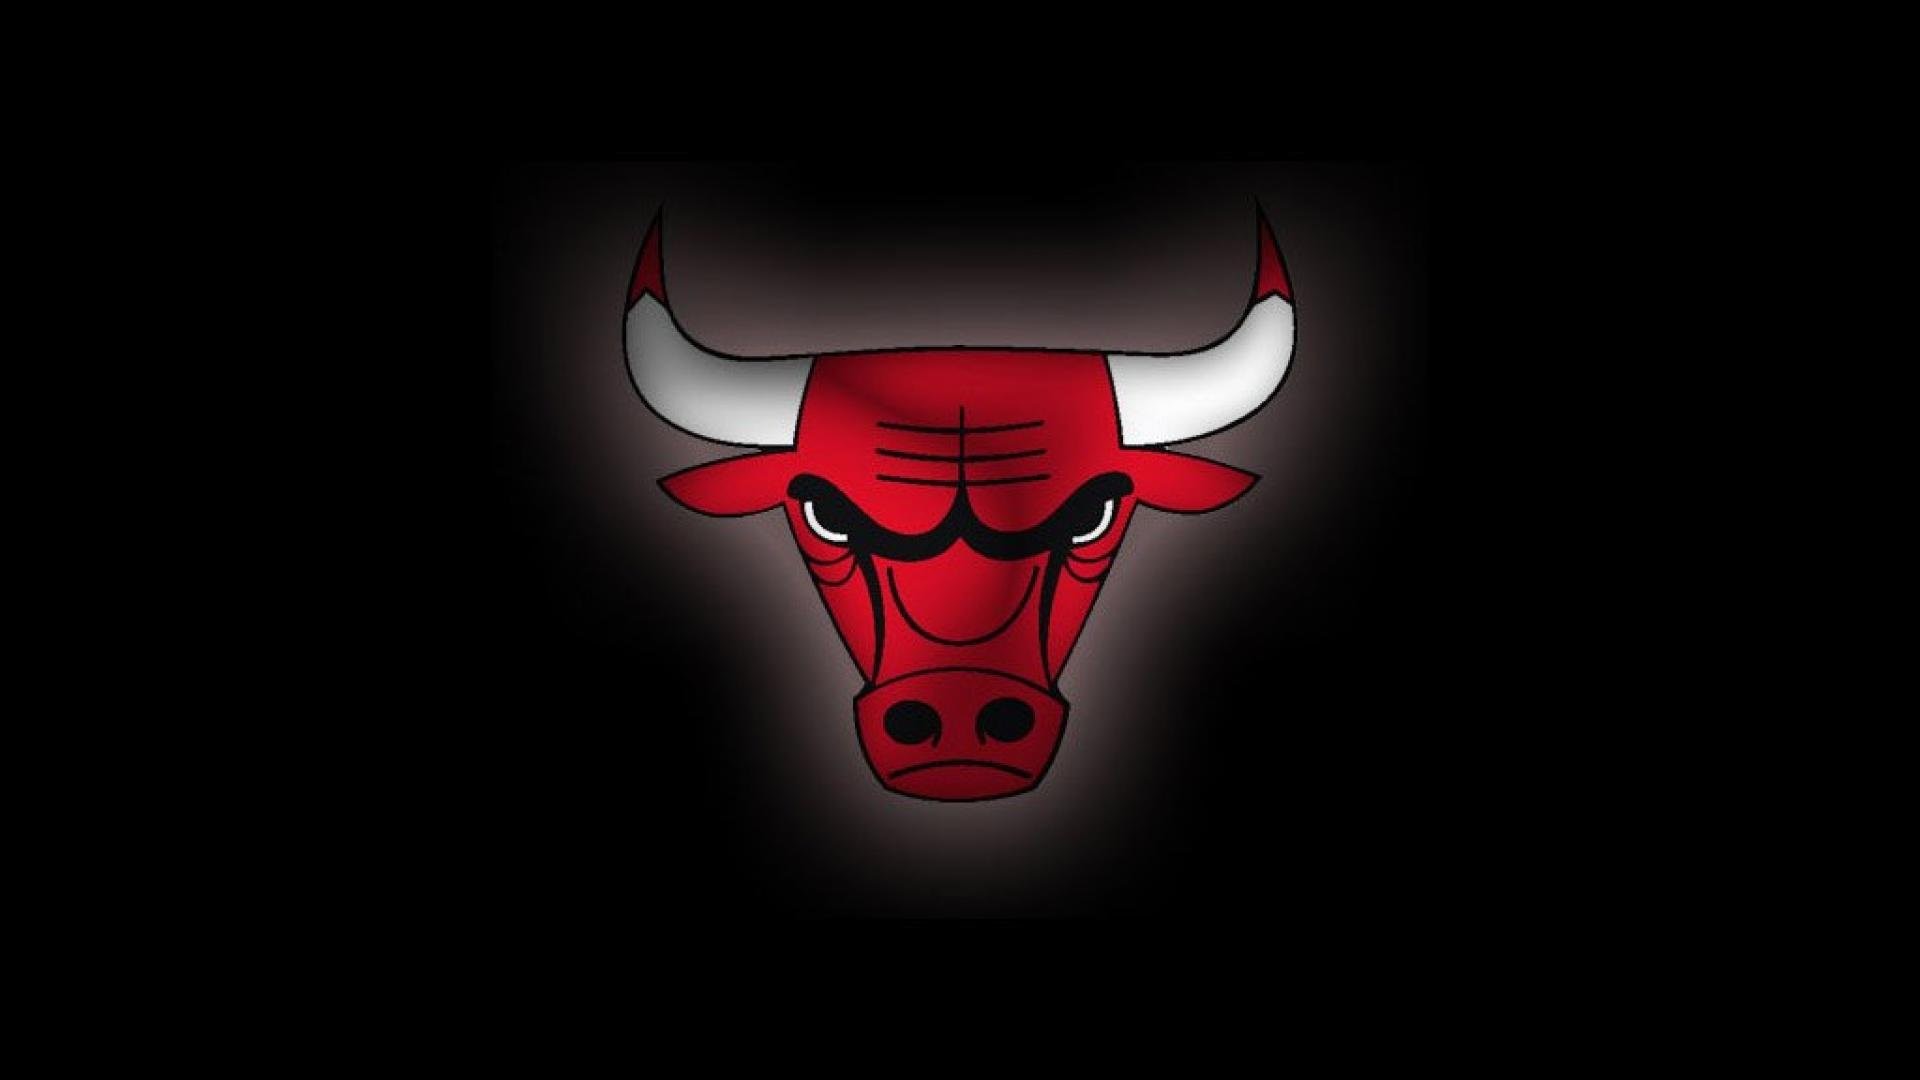 21 Chicago bulls wallpaper ideas  chicago bulls wallpaper bulls wallpaper  chicago bulls